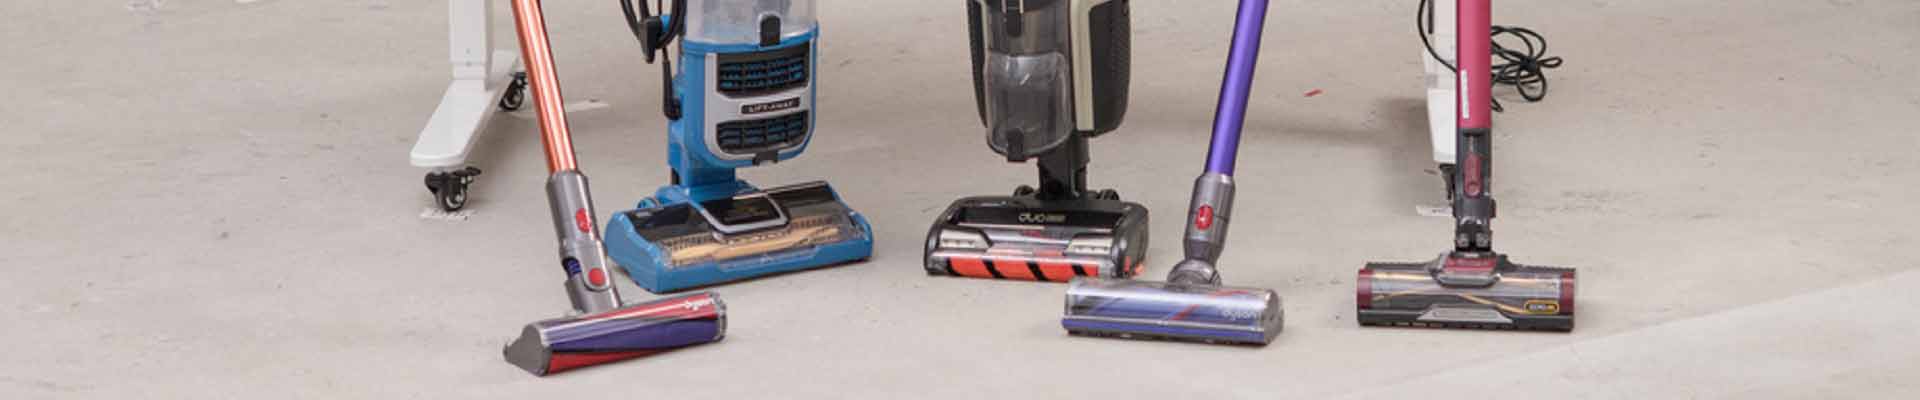 best-multi-surface-vacuum-cleaners